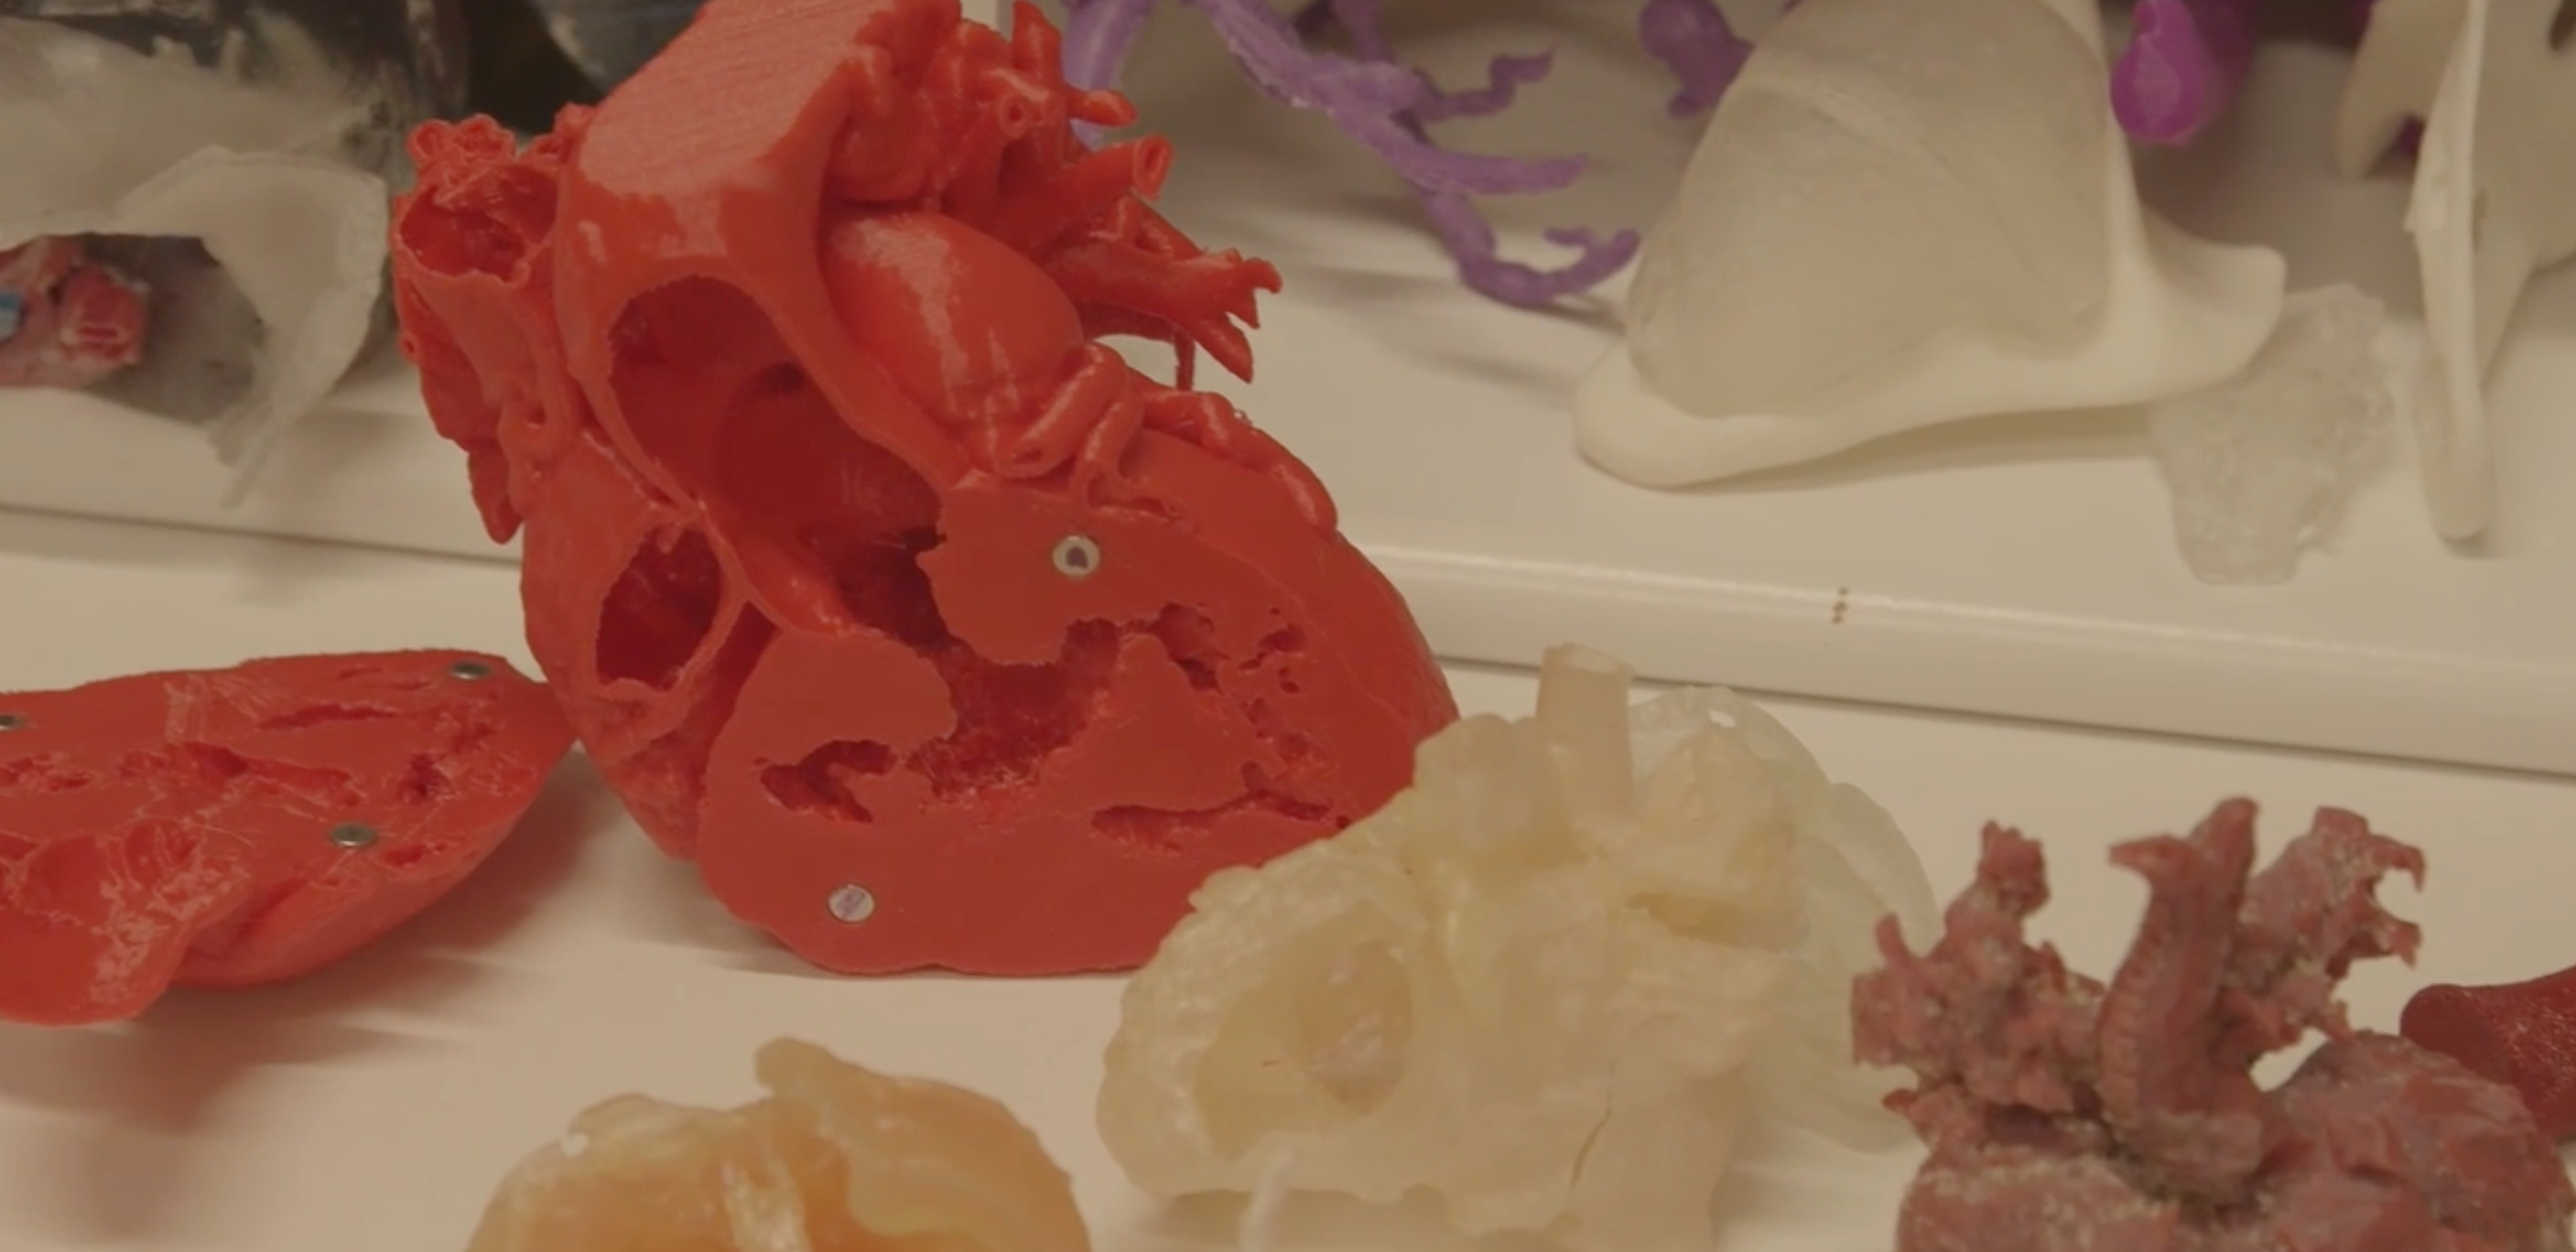 Inside the Practice: Inside 3D Printers for Procedures